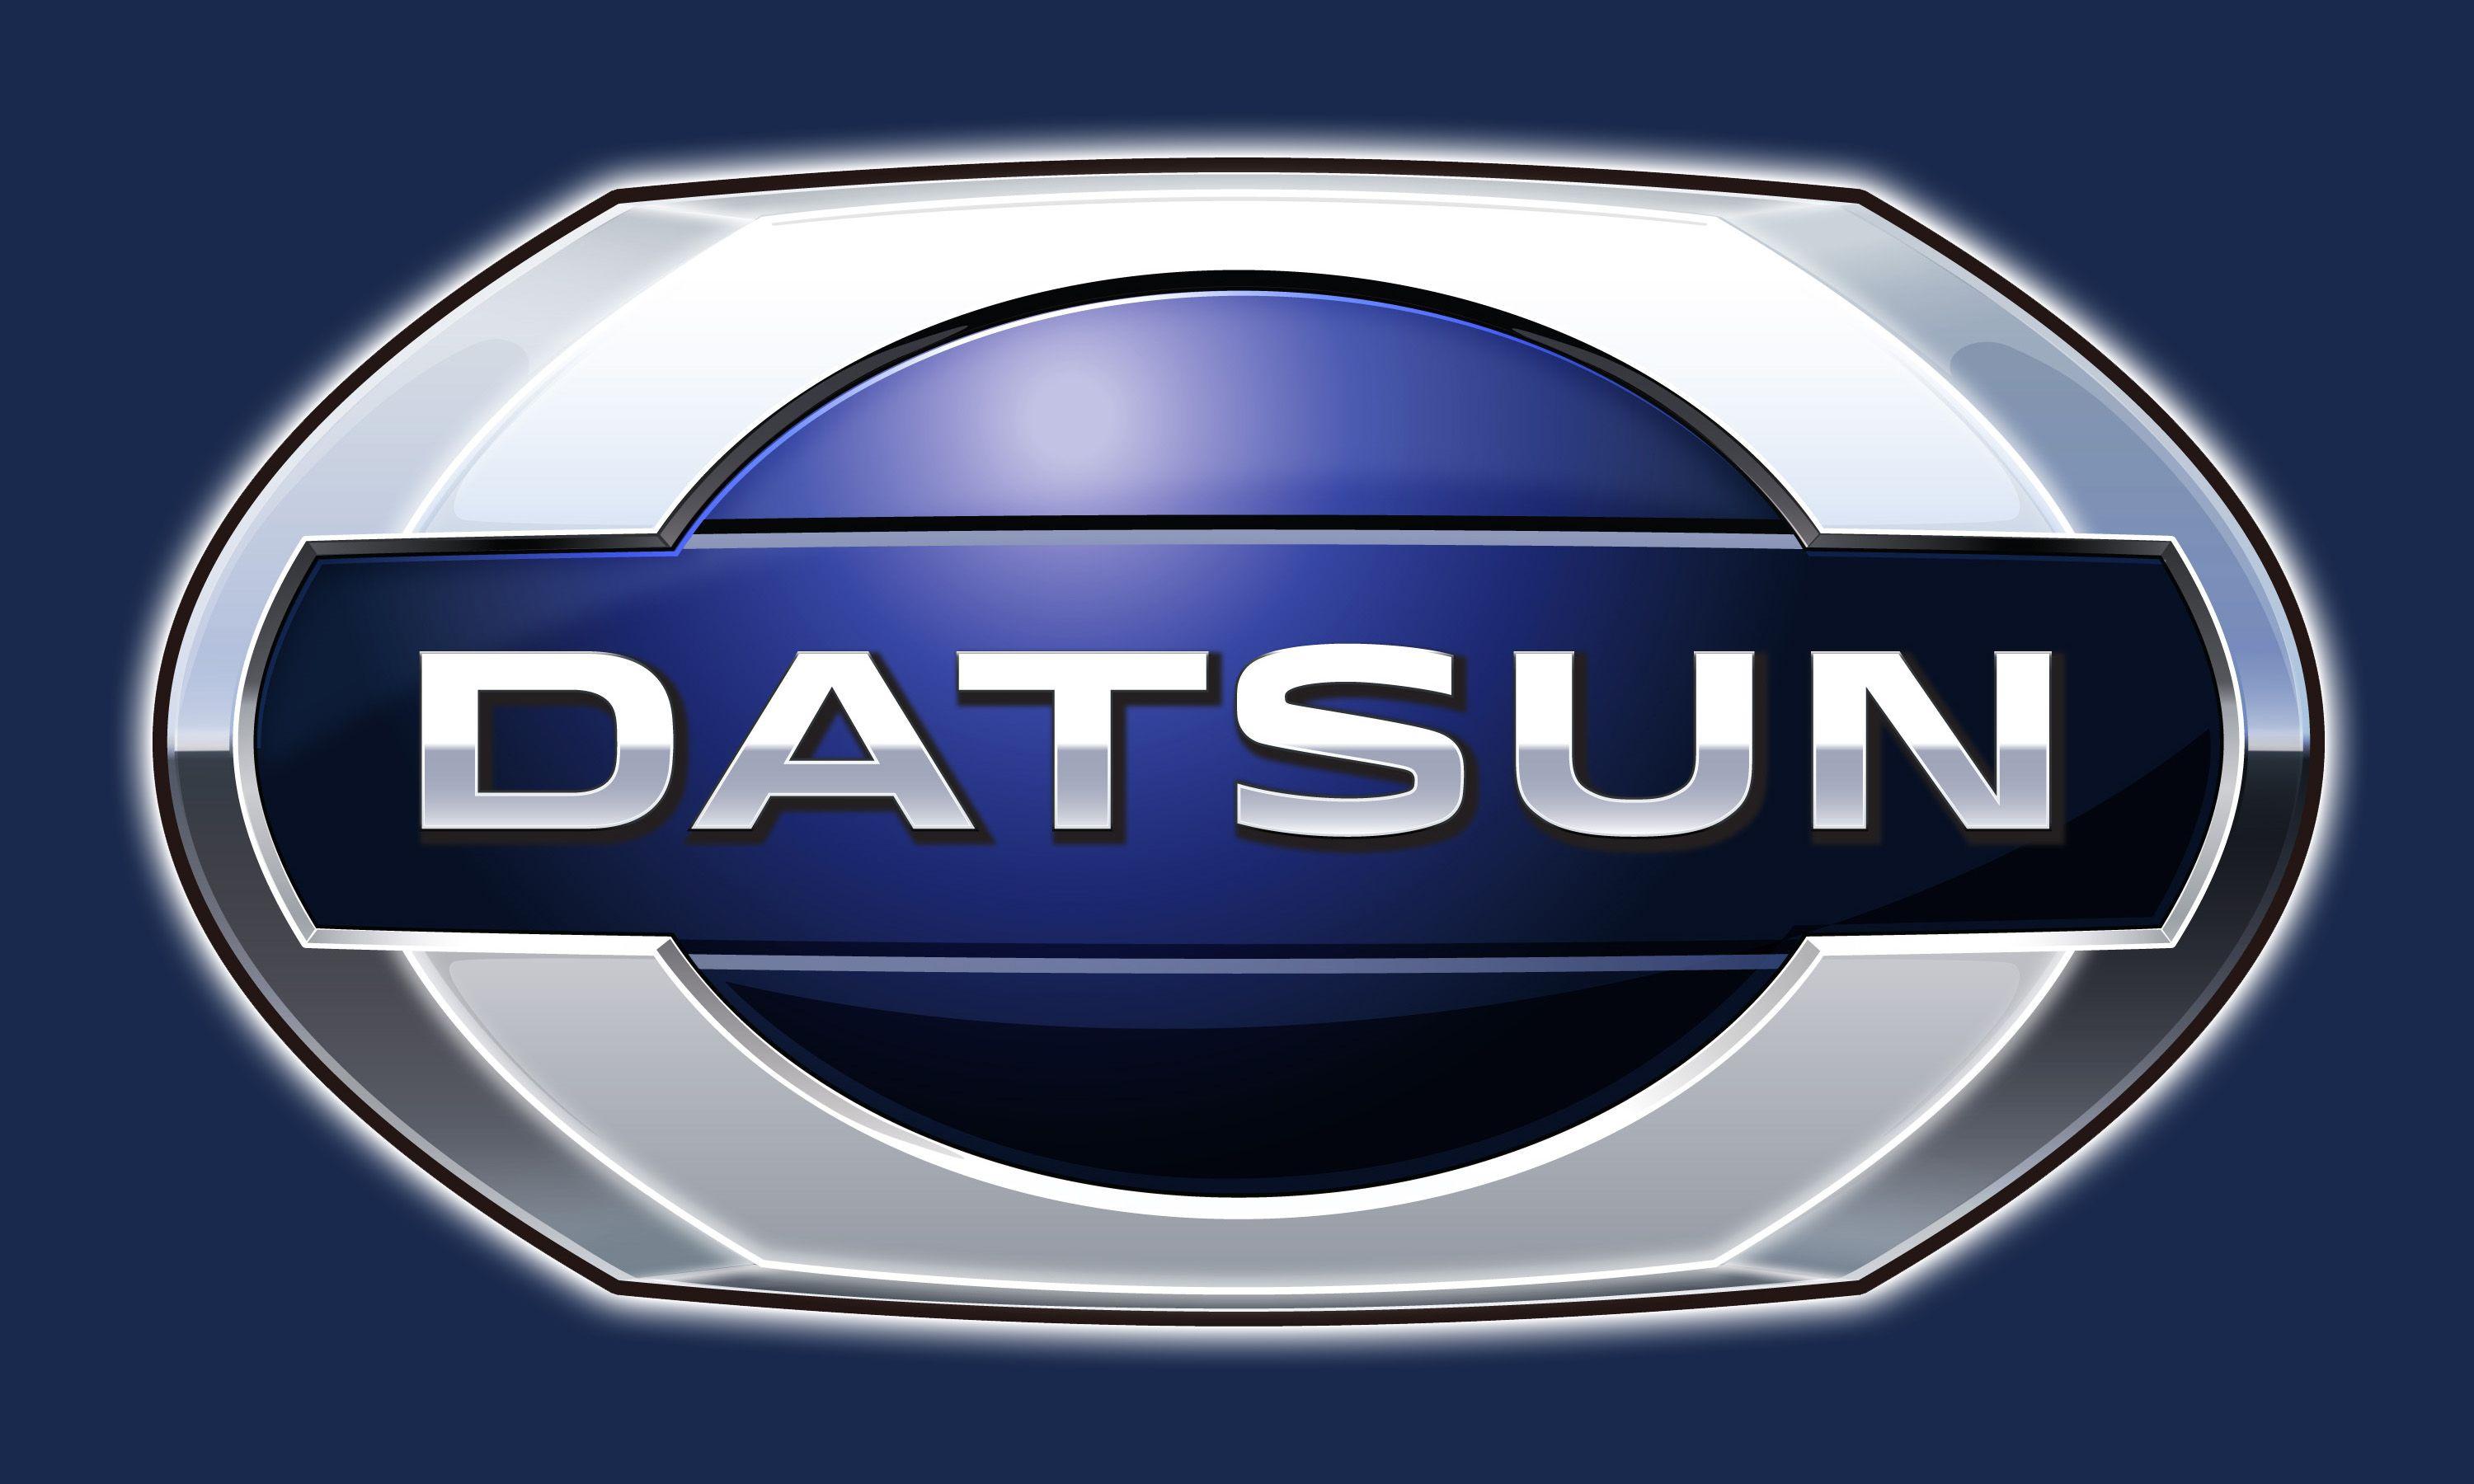 Datsun Logo - Datsun Logo Meaning and History, latest models. World Cars Brands